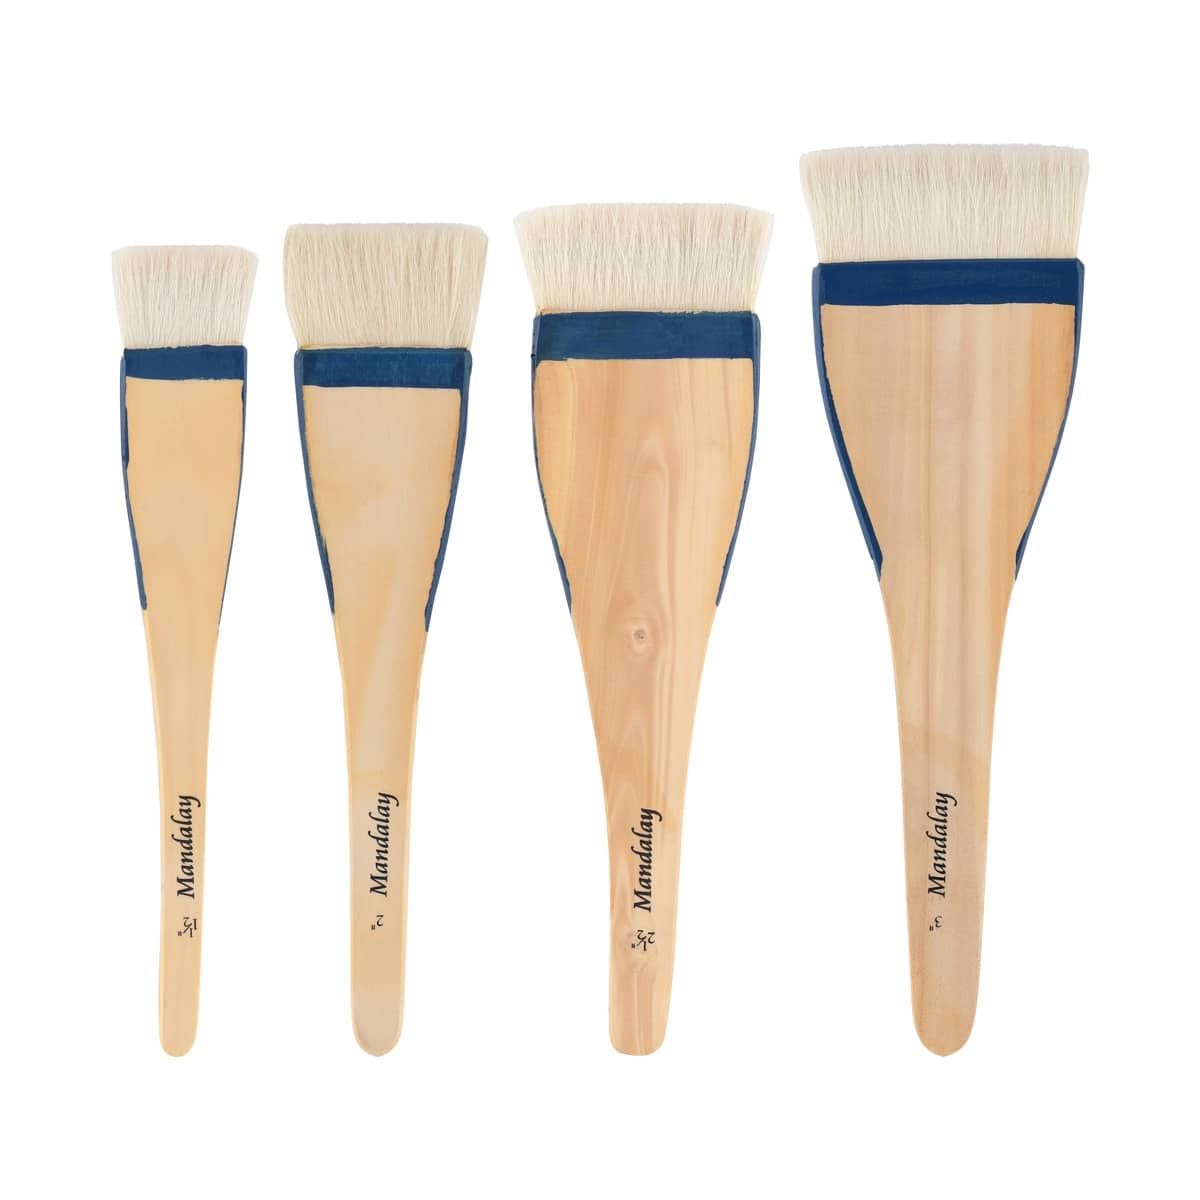 Hake Brush Set No. 1, Includes sizes 1.5", 2", 2.5" and 3"